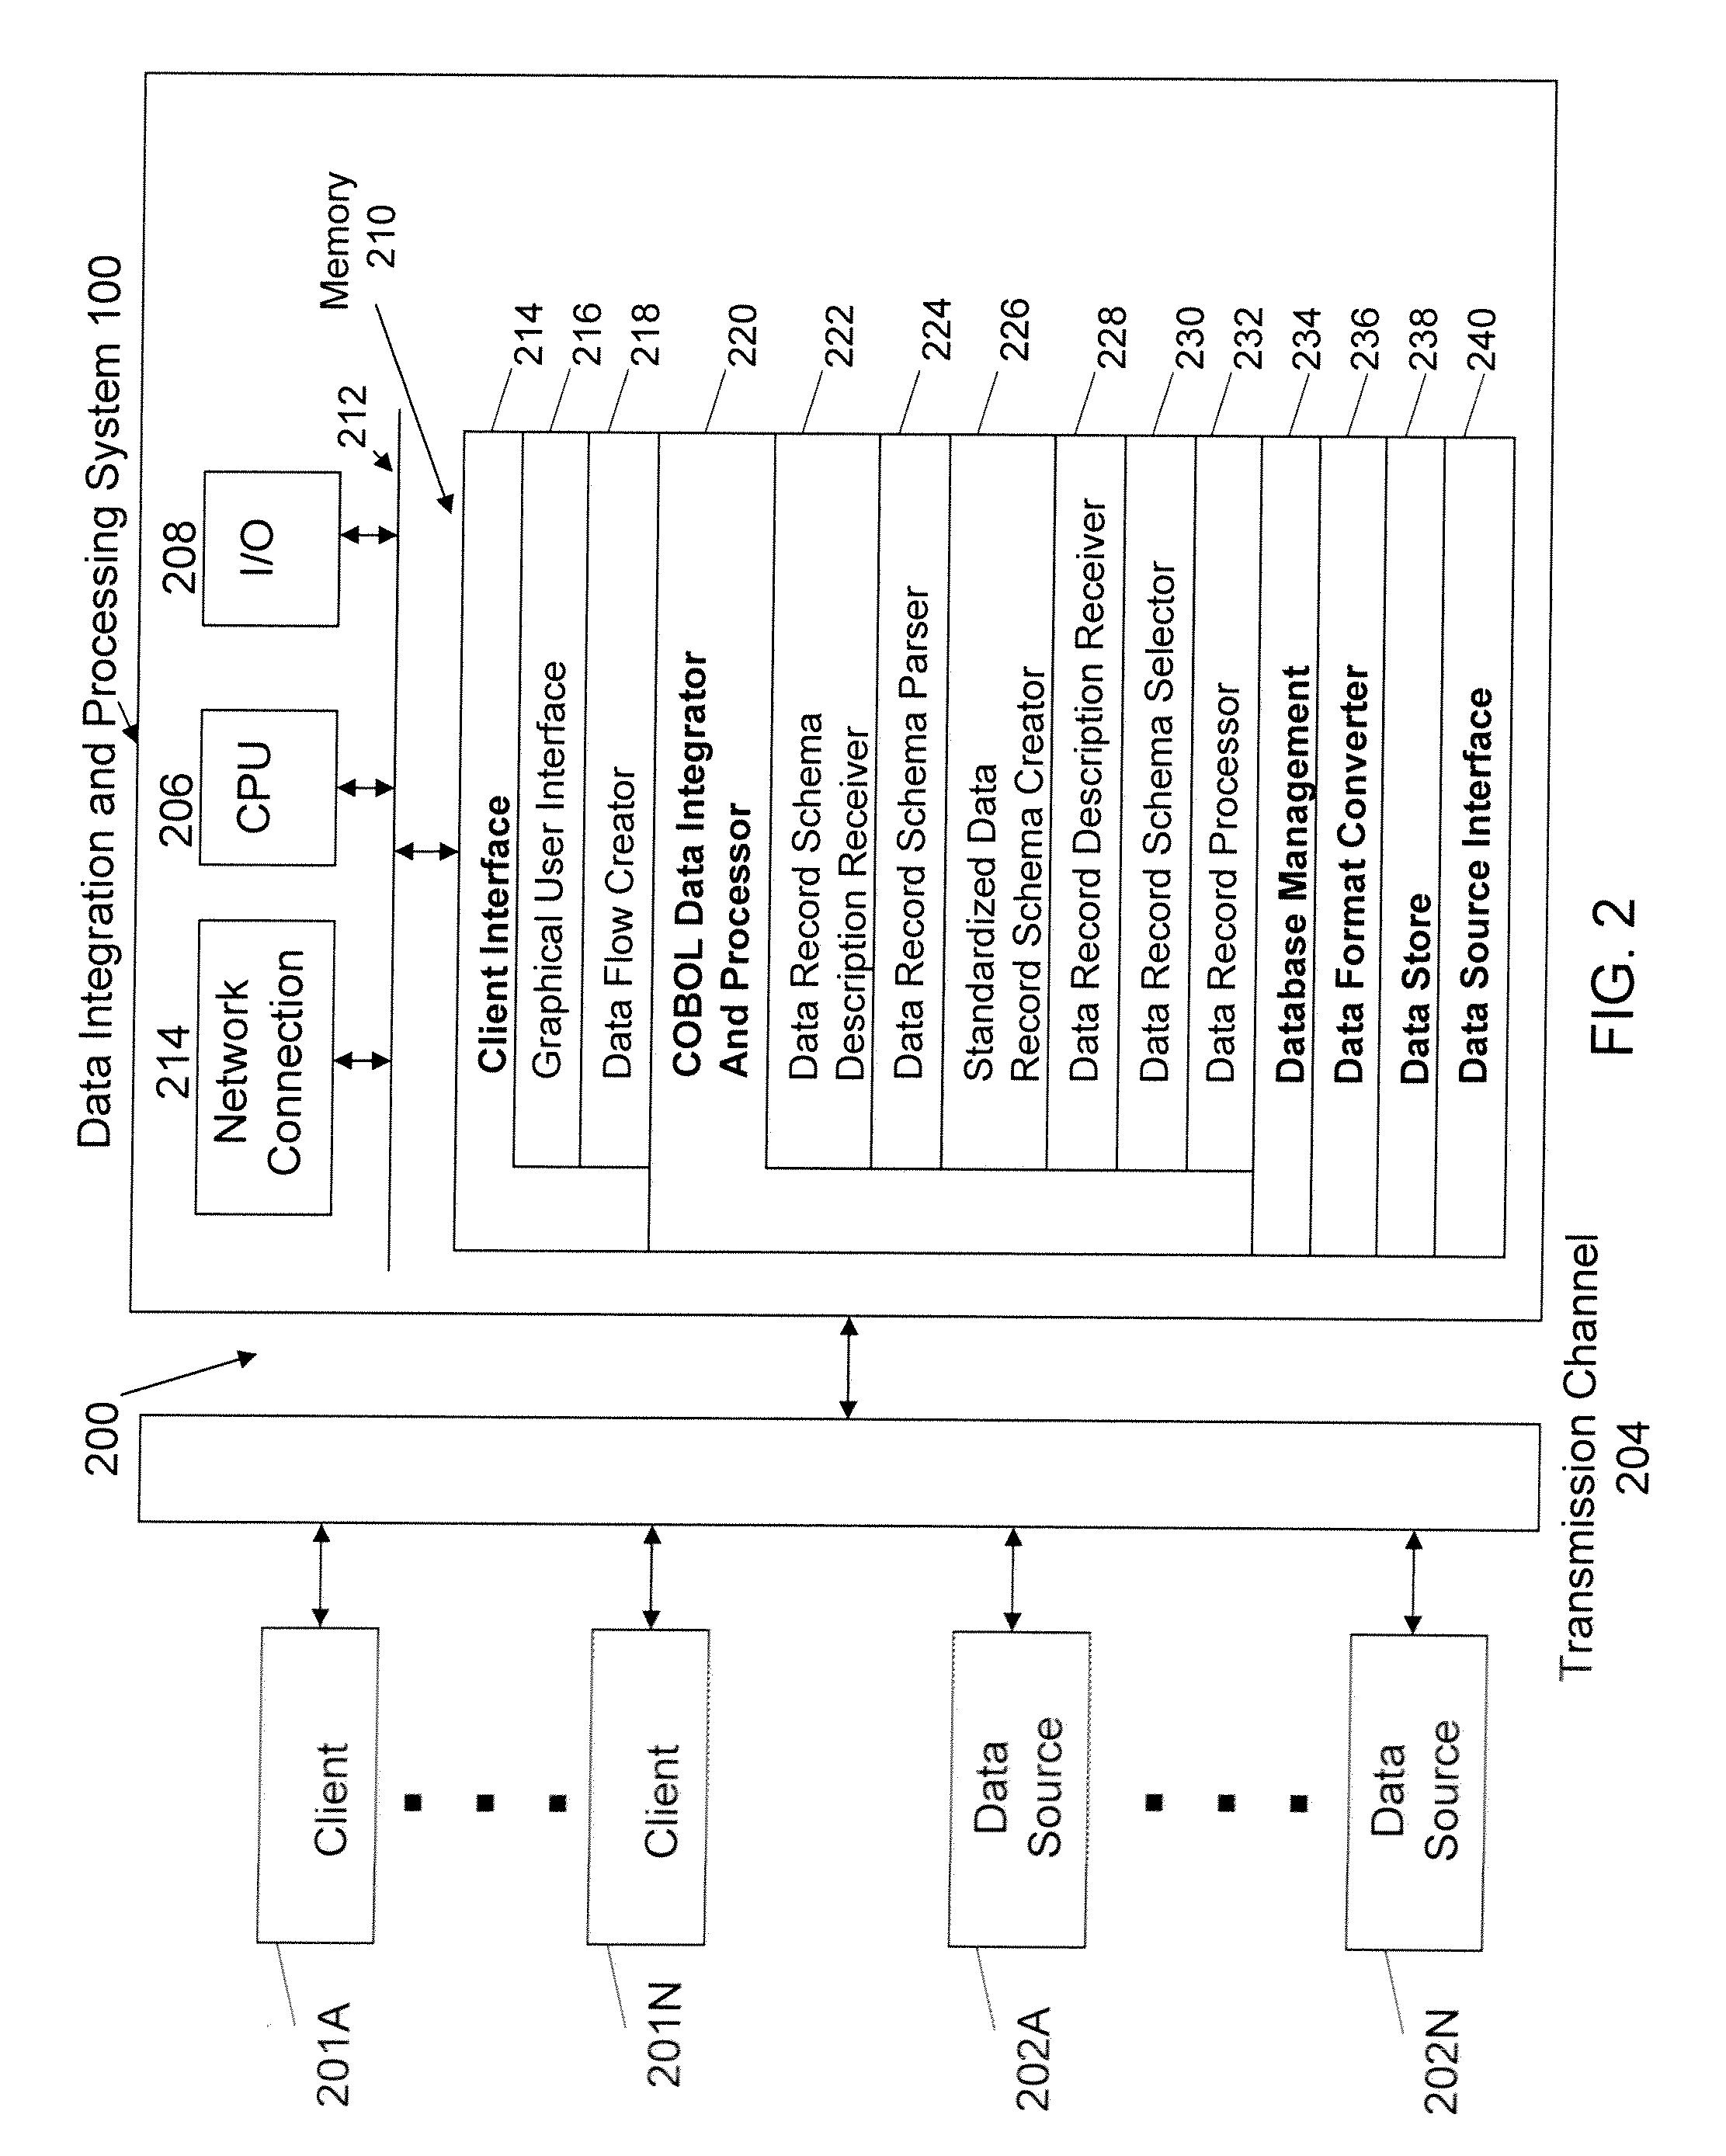 Apparatus and method for processing data corresponding to multiple cobol data record schemas